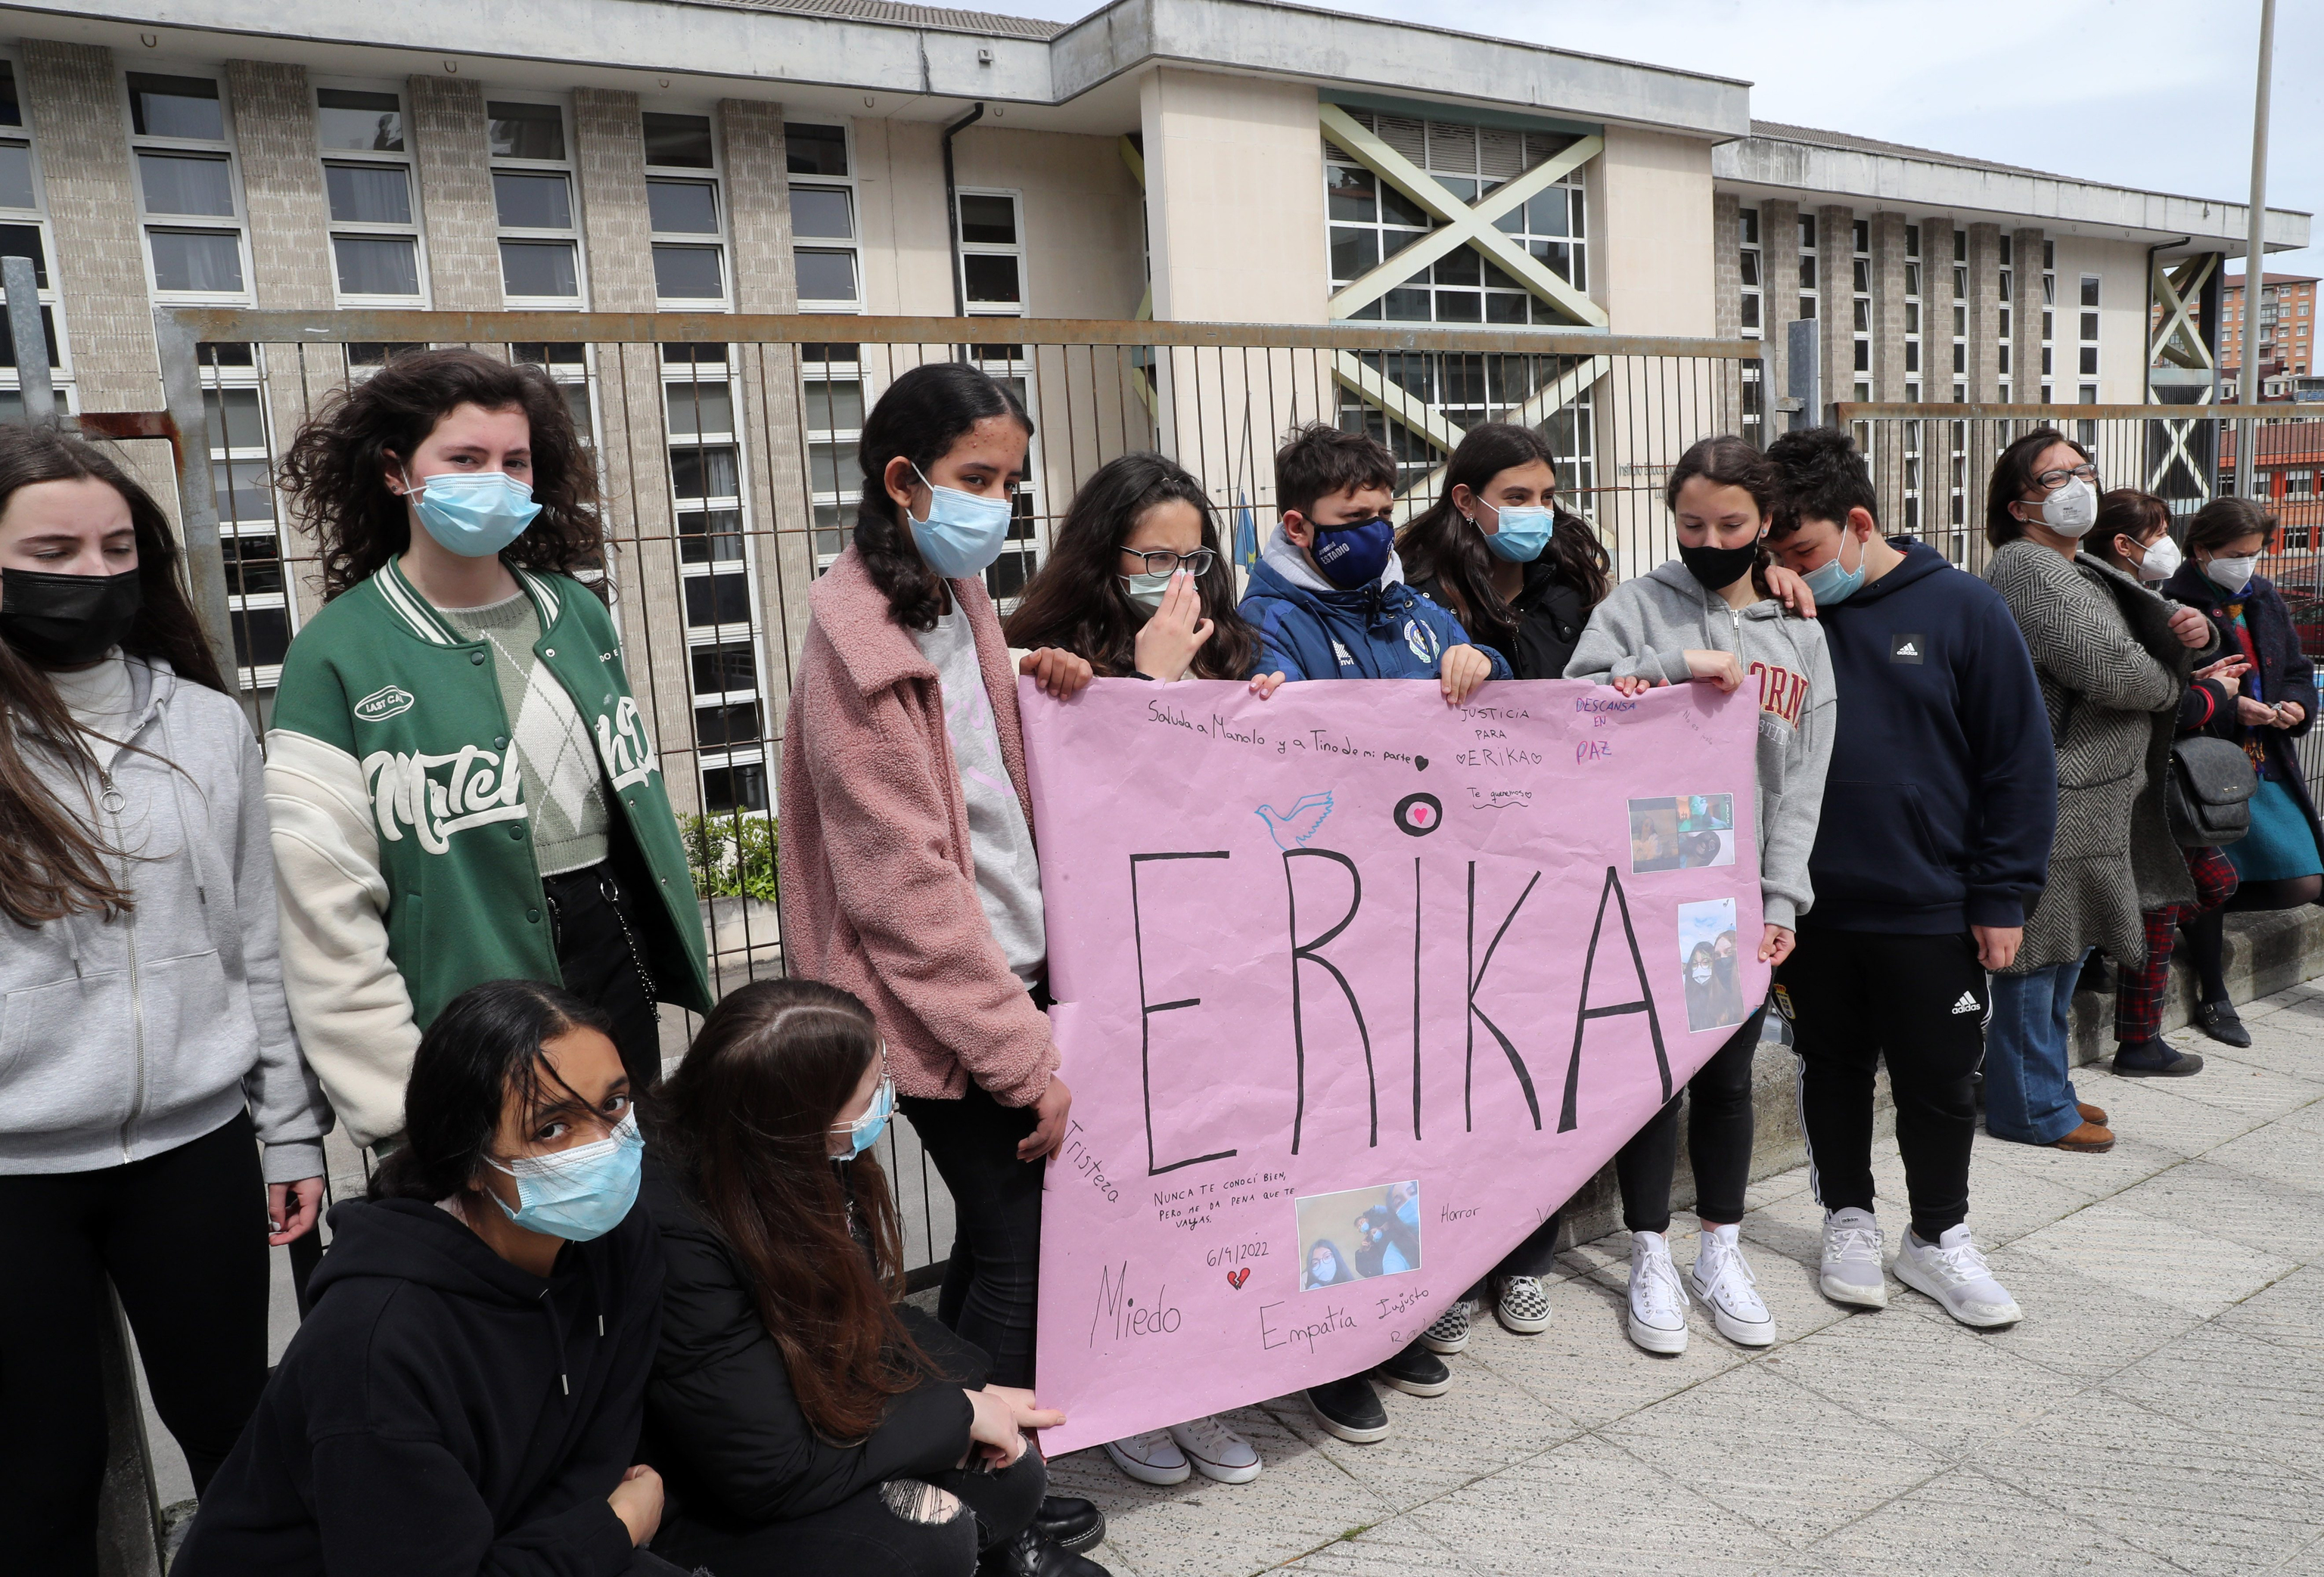 Compañeros de instituto homenajean a Érika en Oviedo.